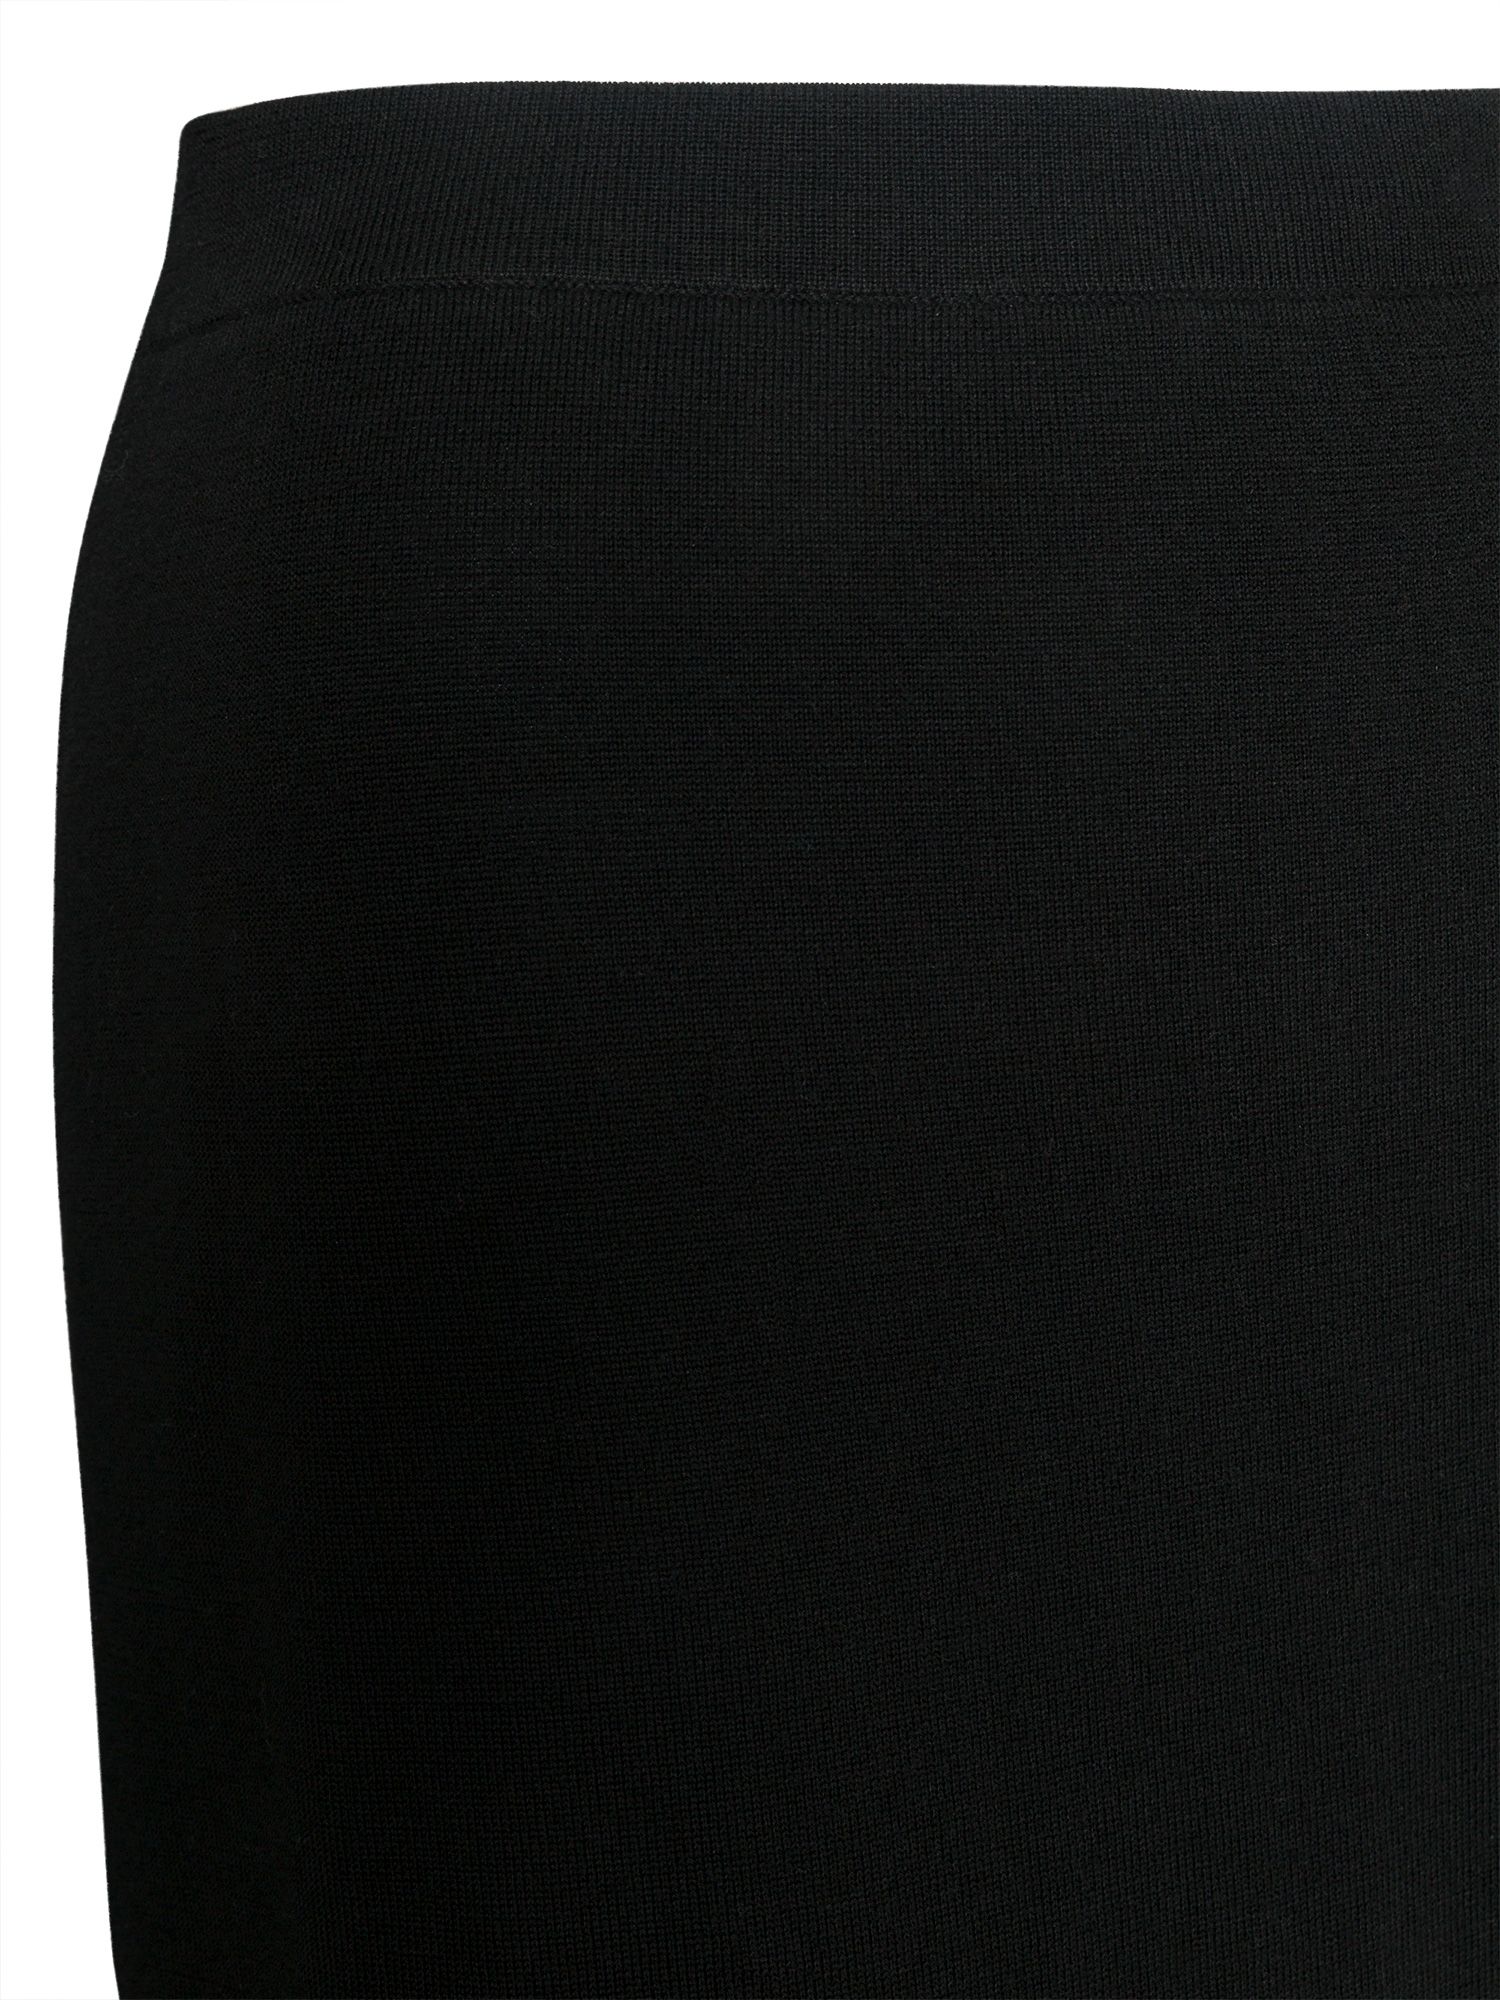 East Merino Wool Midi Pencil Skirt, Black at John Lewis & Partners